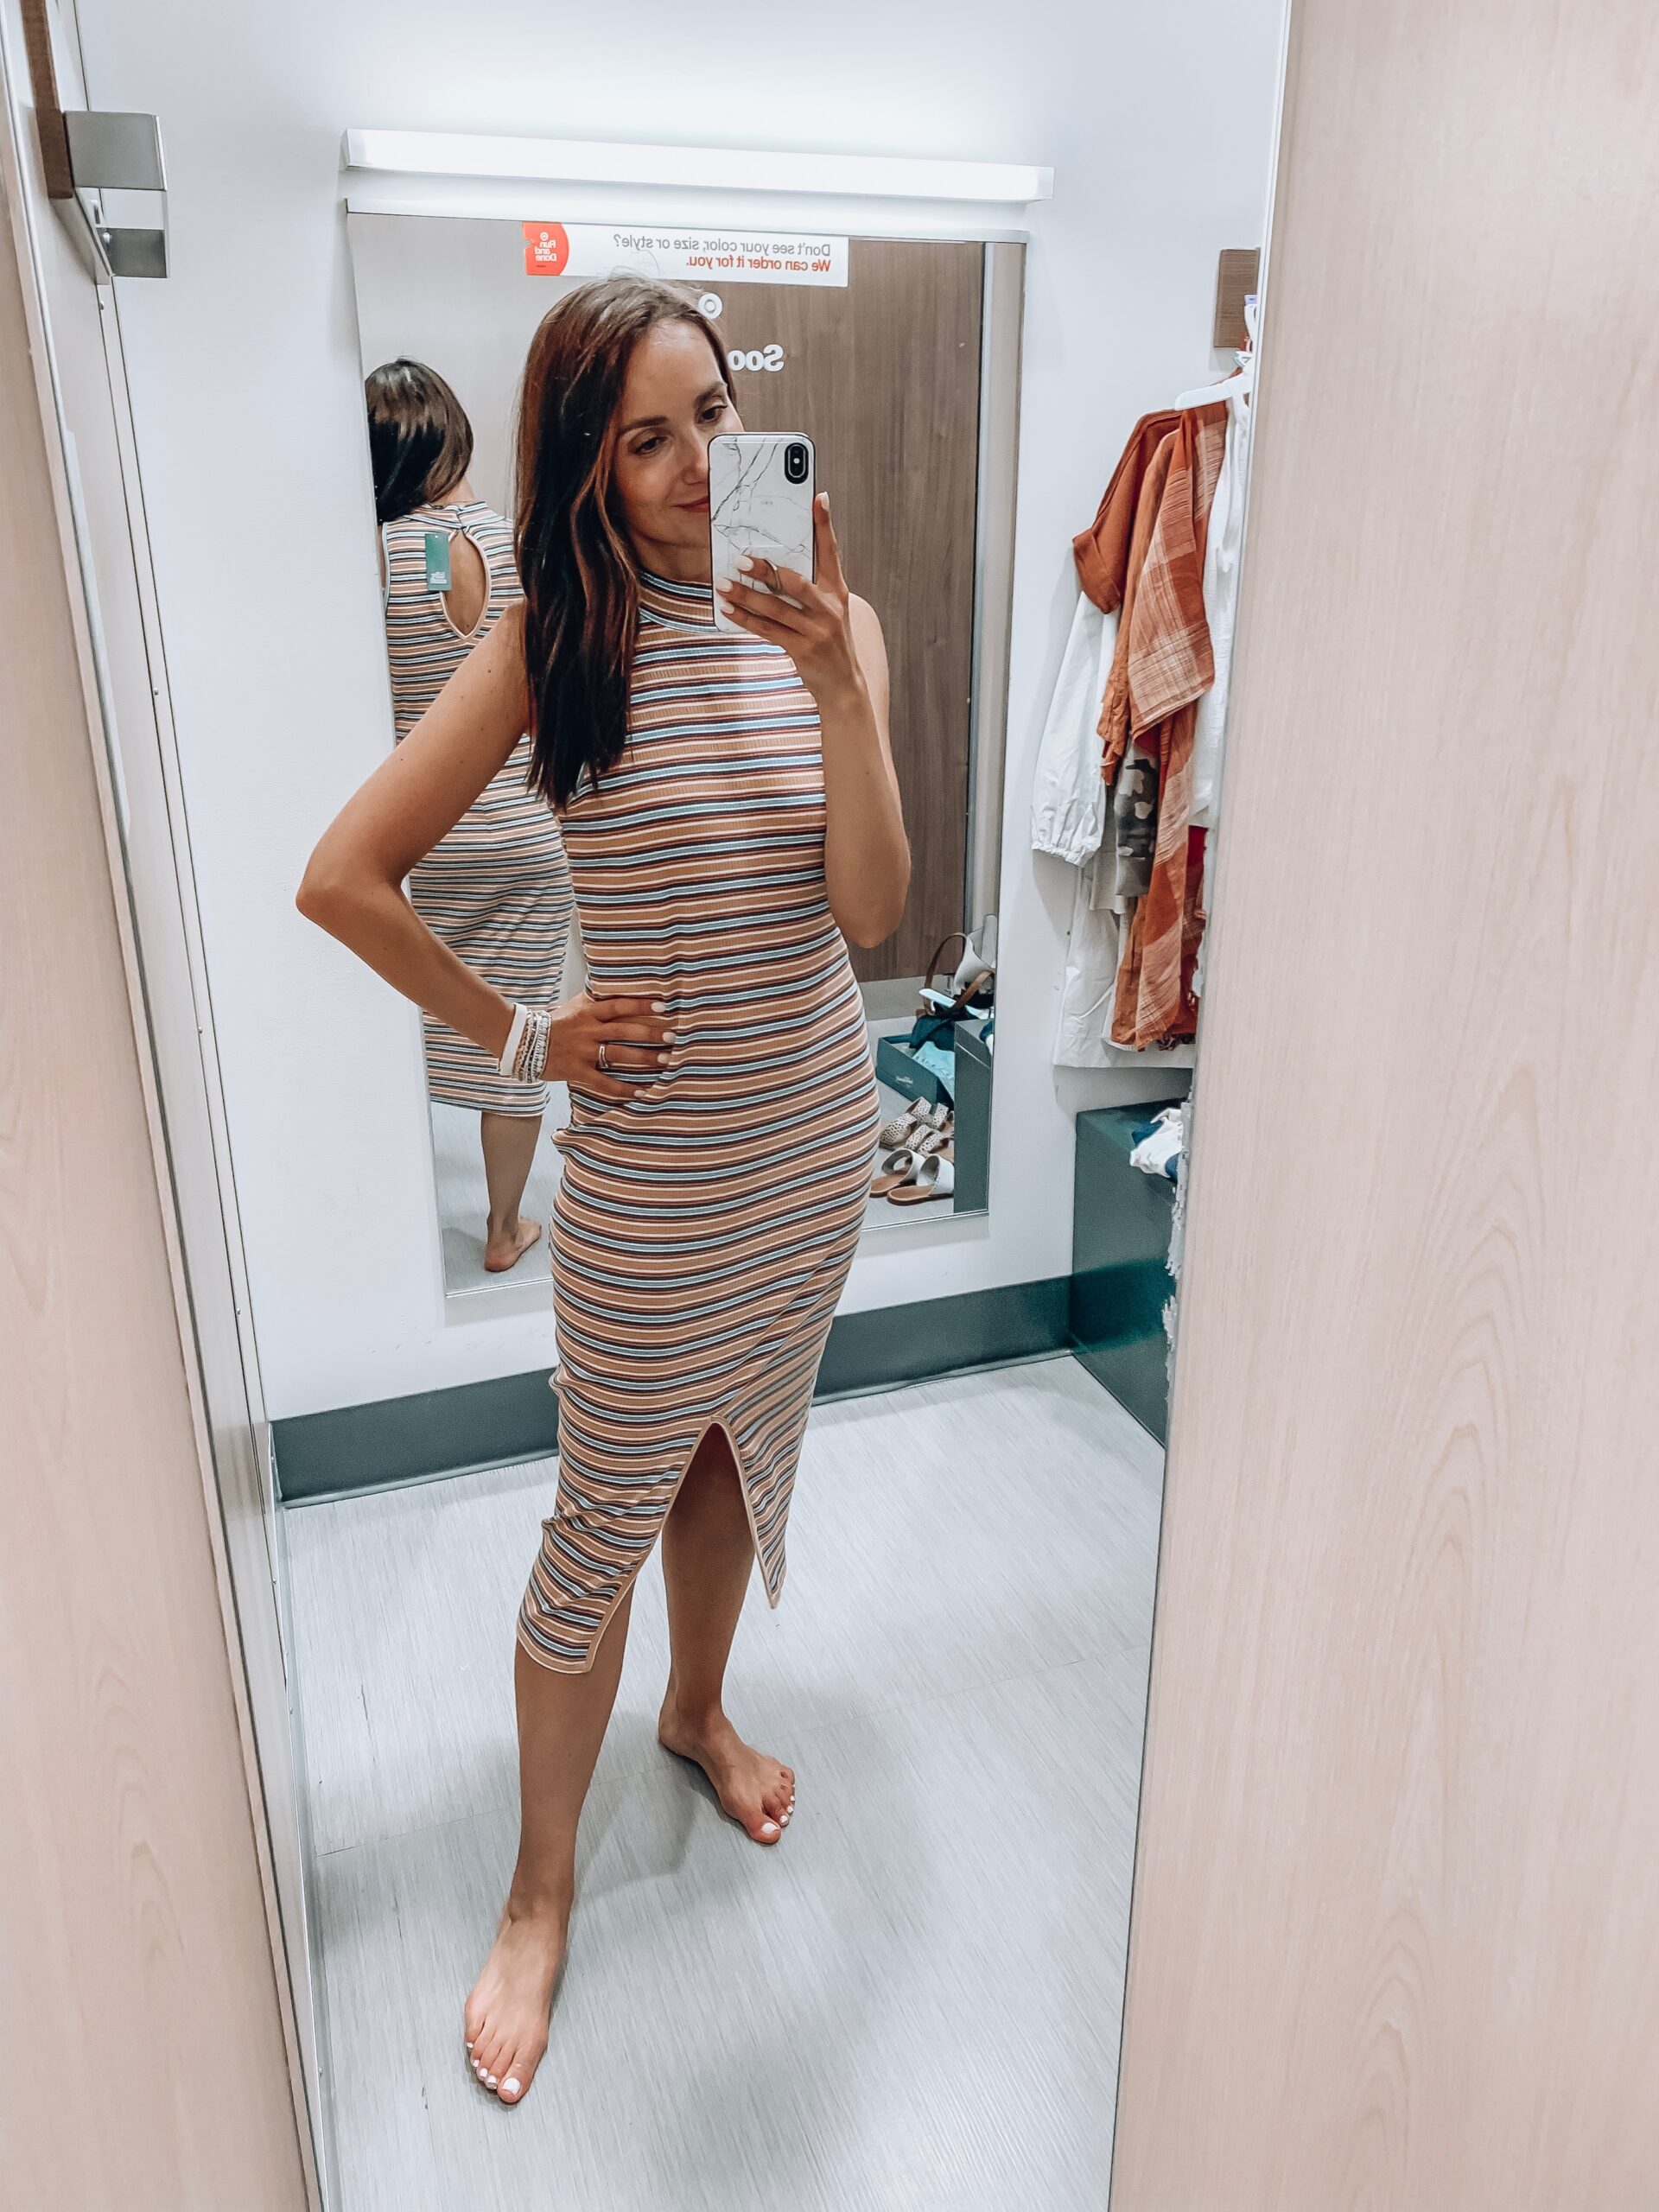 Sleeveless Dress From Target